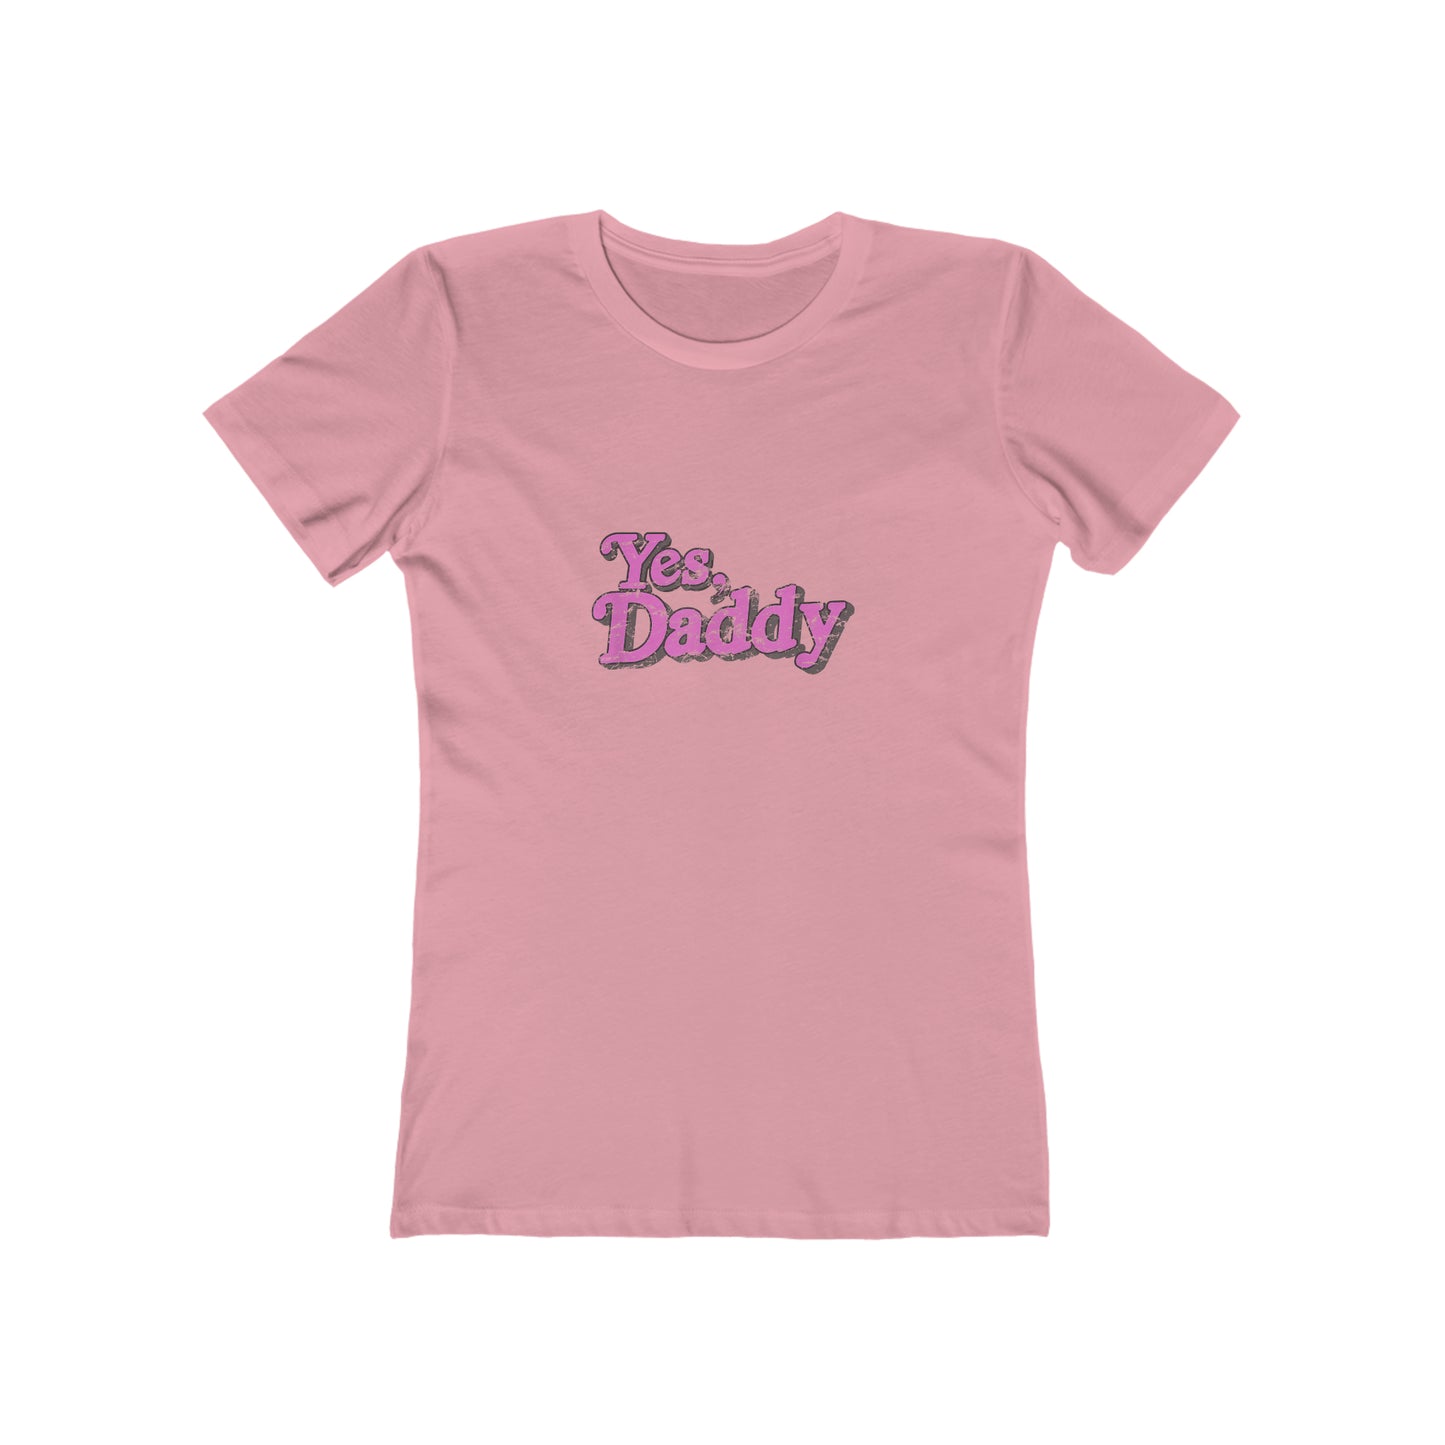 Yes Daddy - Women's T-shirt